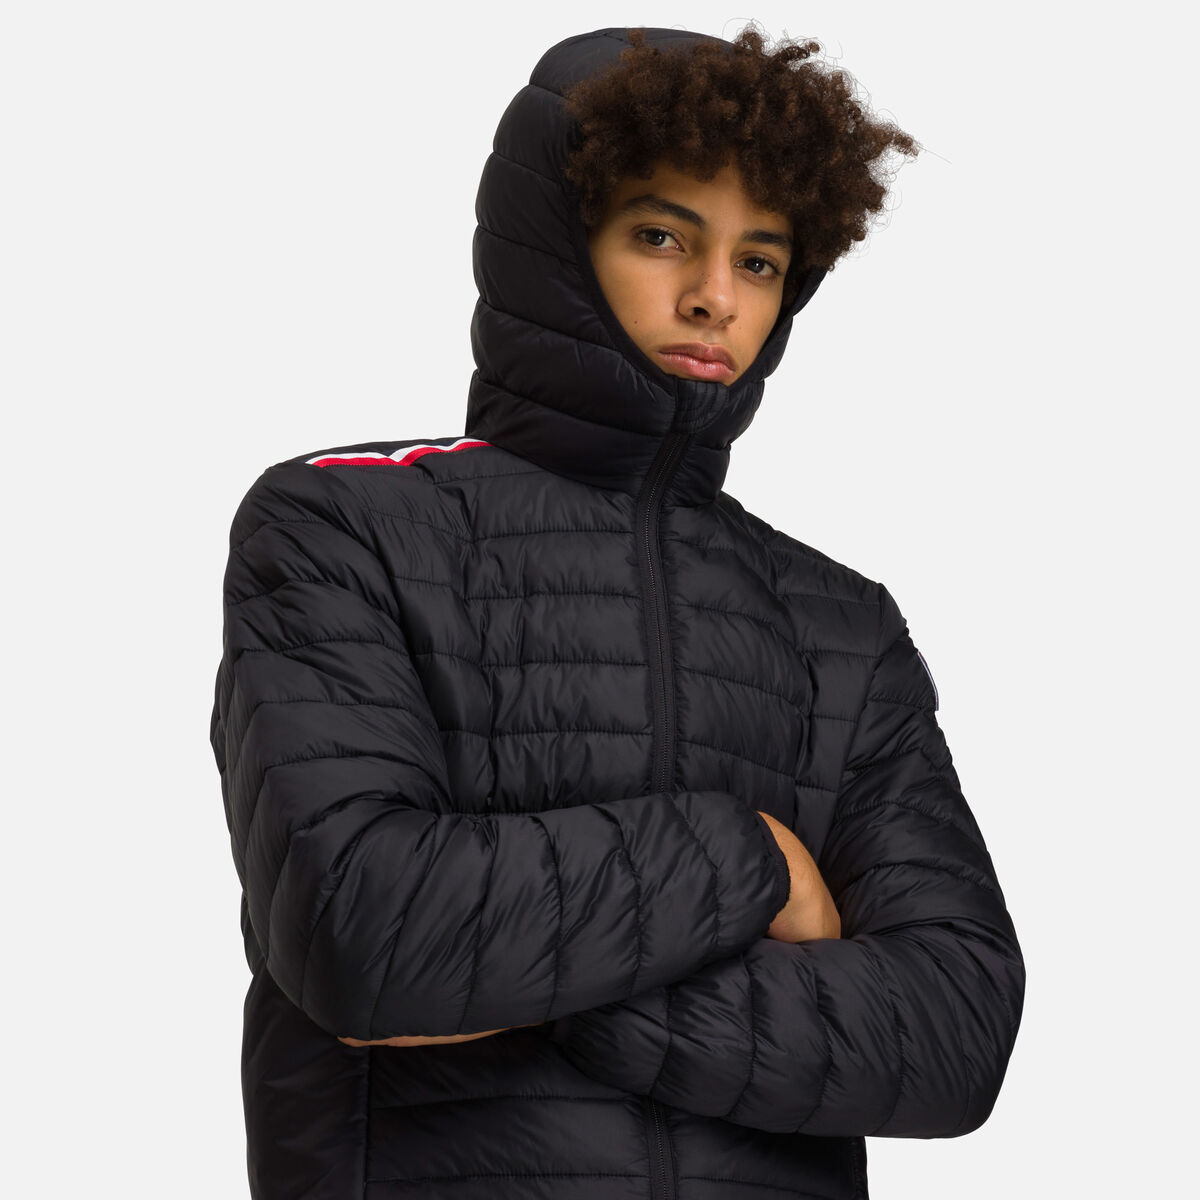 Rossignol Men's hooded insulated jacket 180GR black